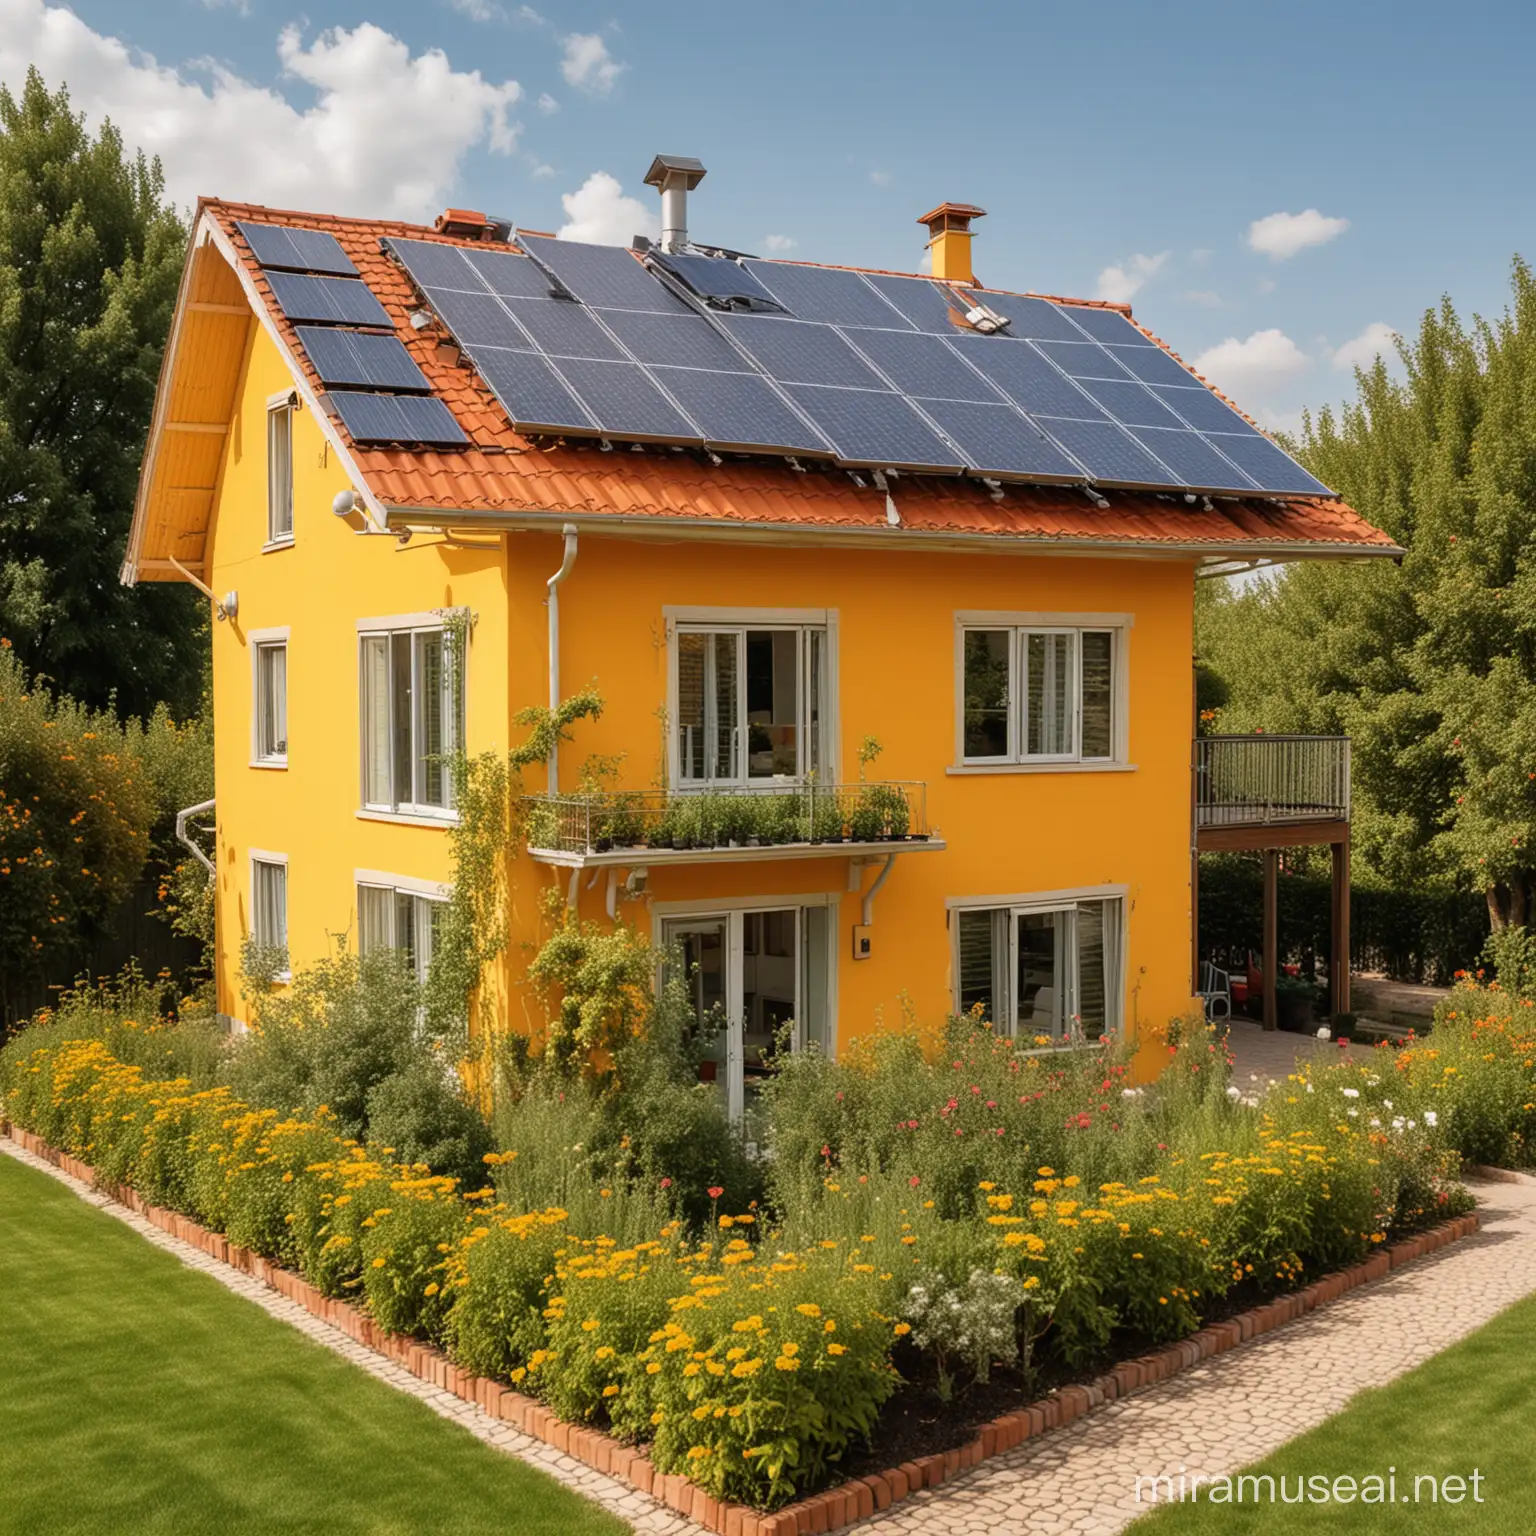 Vibrant Orange House with Solar Panels and Lush Garden